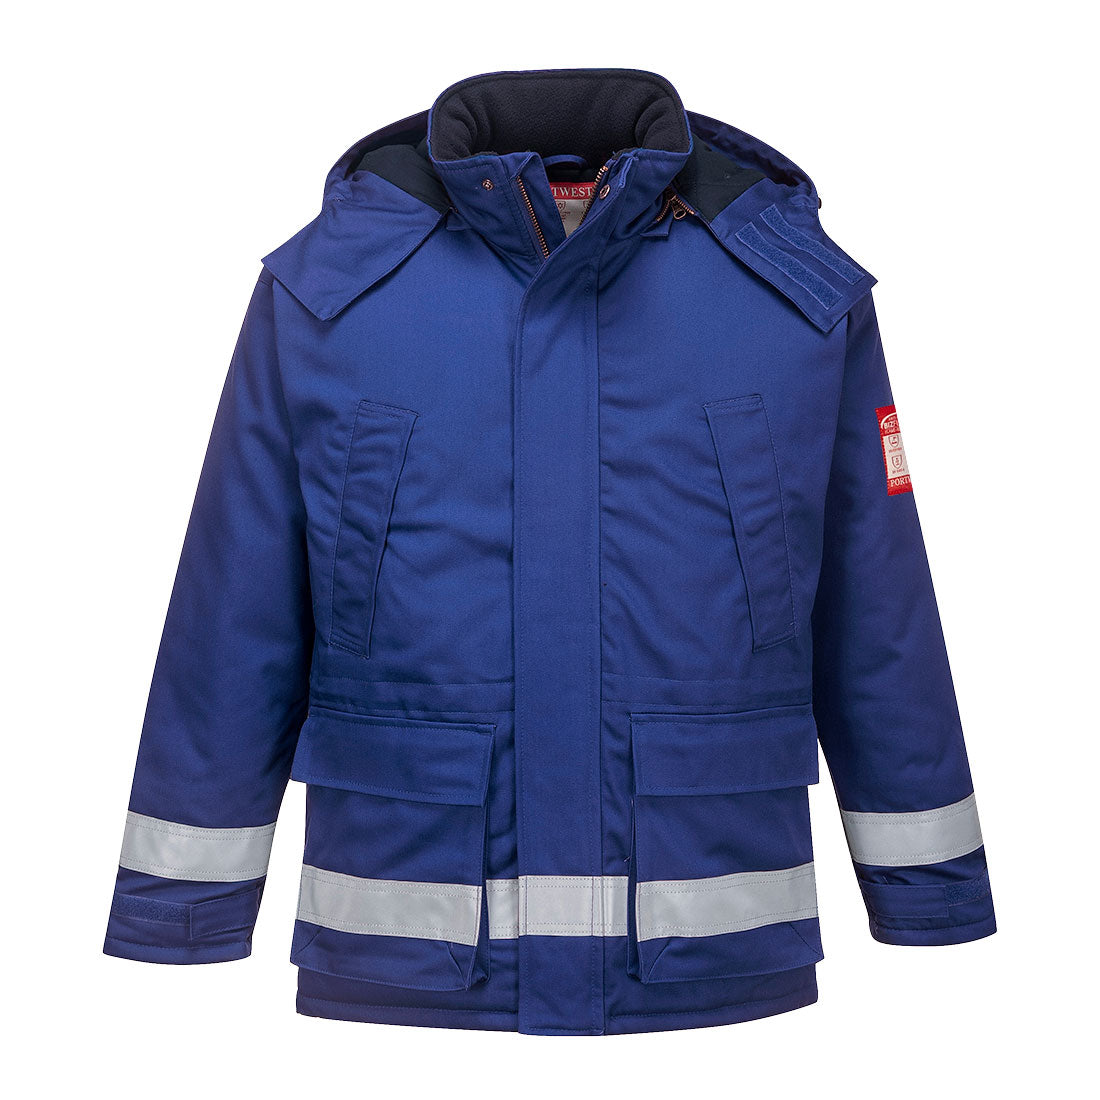 FR Anti-Static Winter Jacket  (FR59)